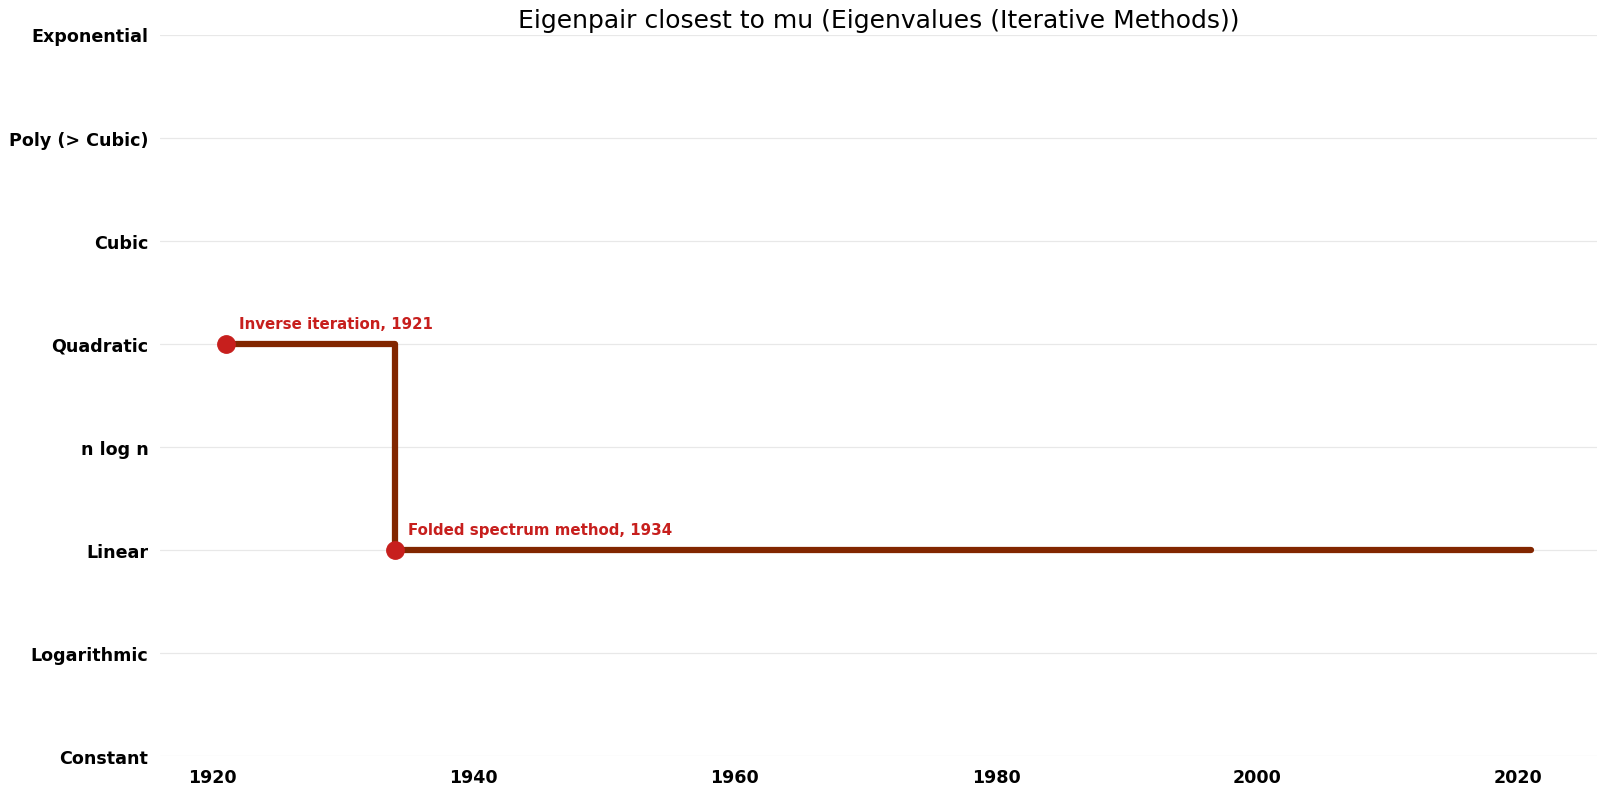 Eigenvalues (Iterative Methods) - Eigenpair closest to mu - Space.png